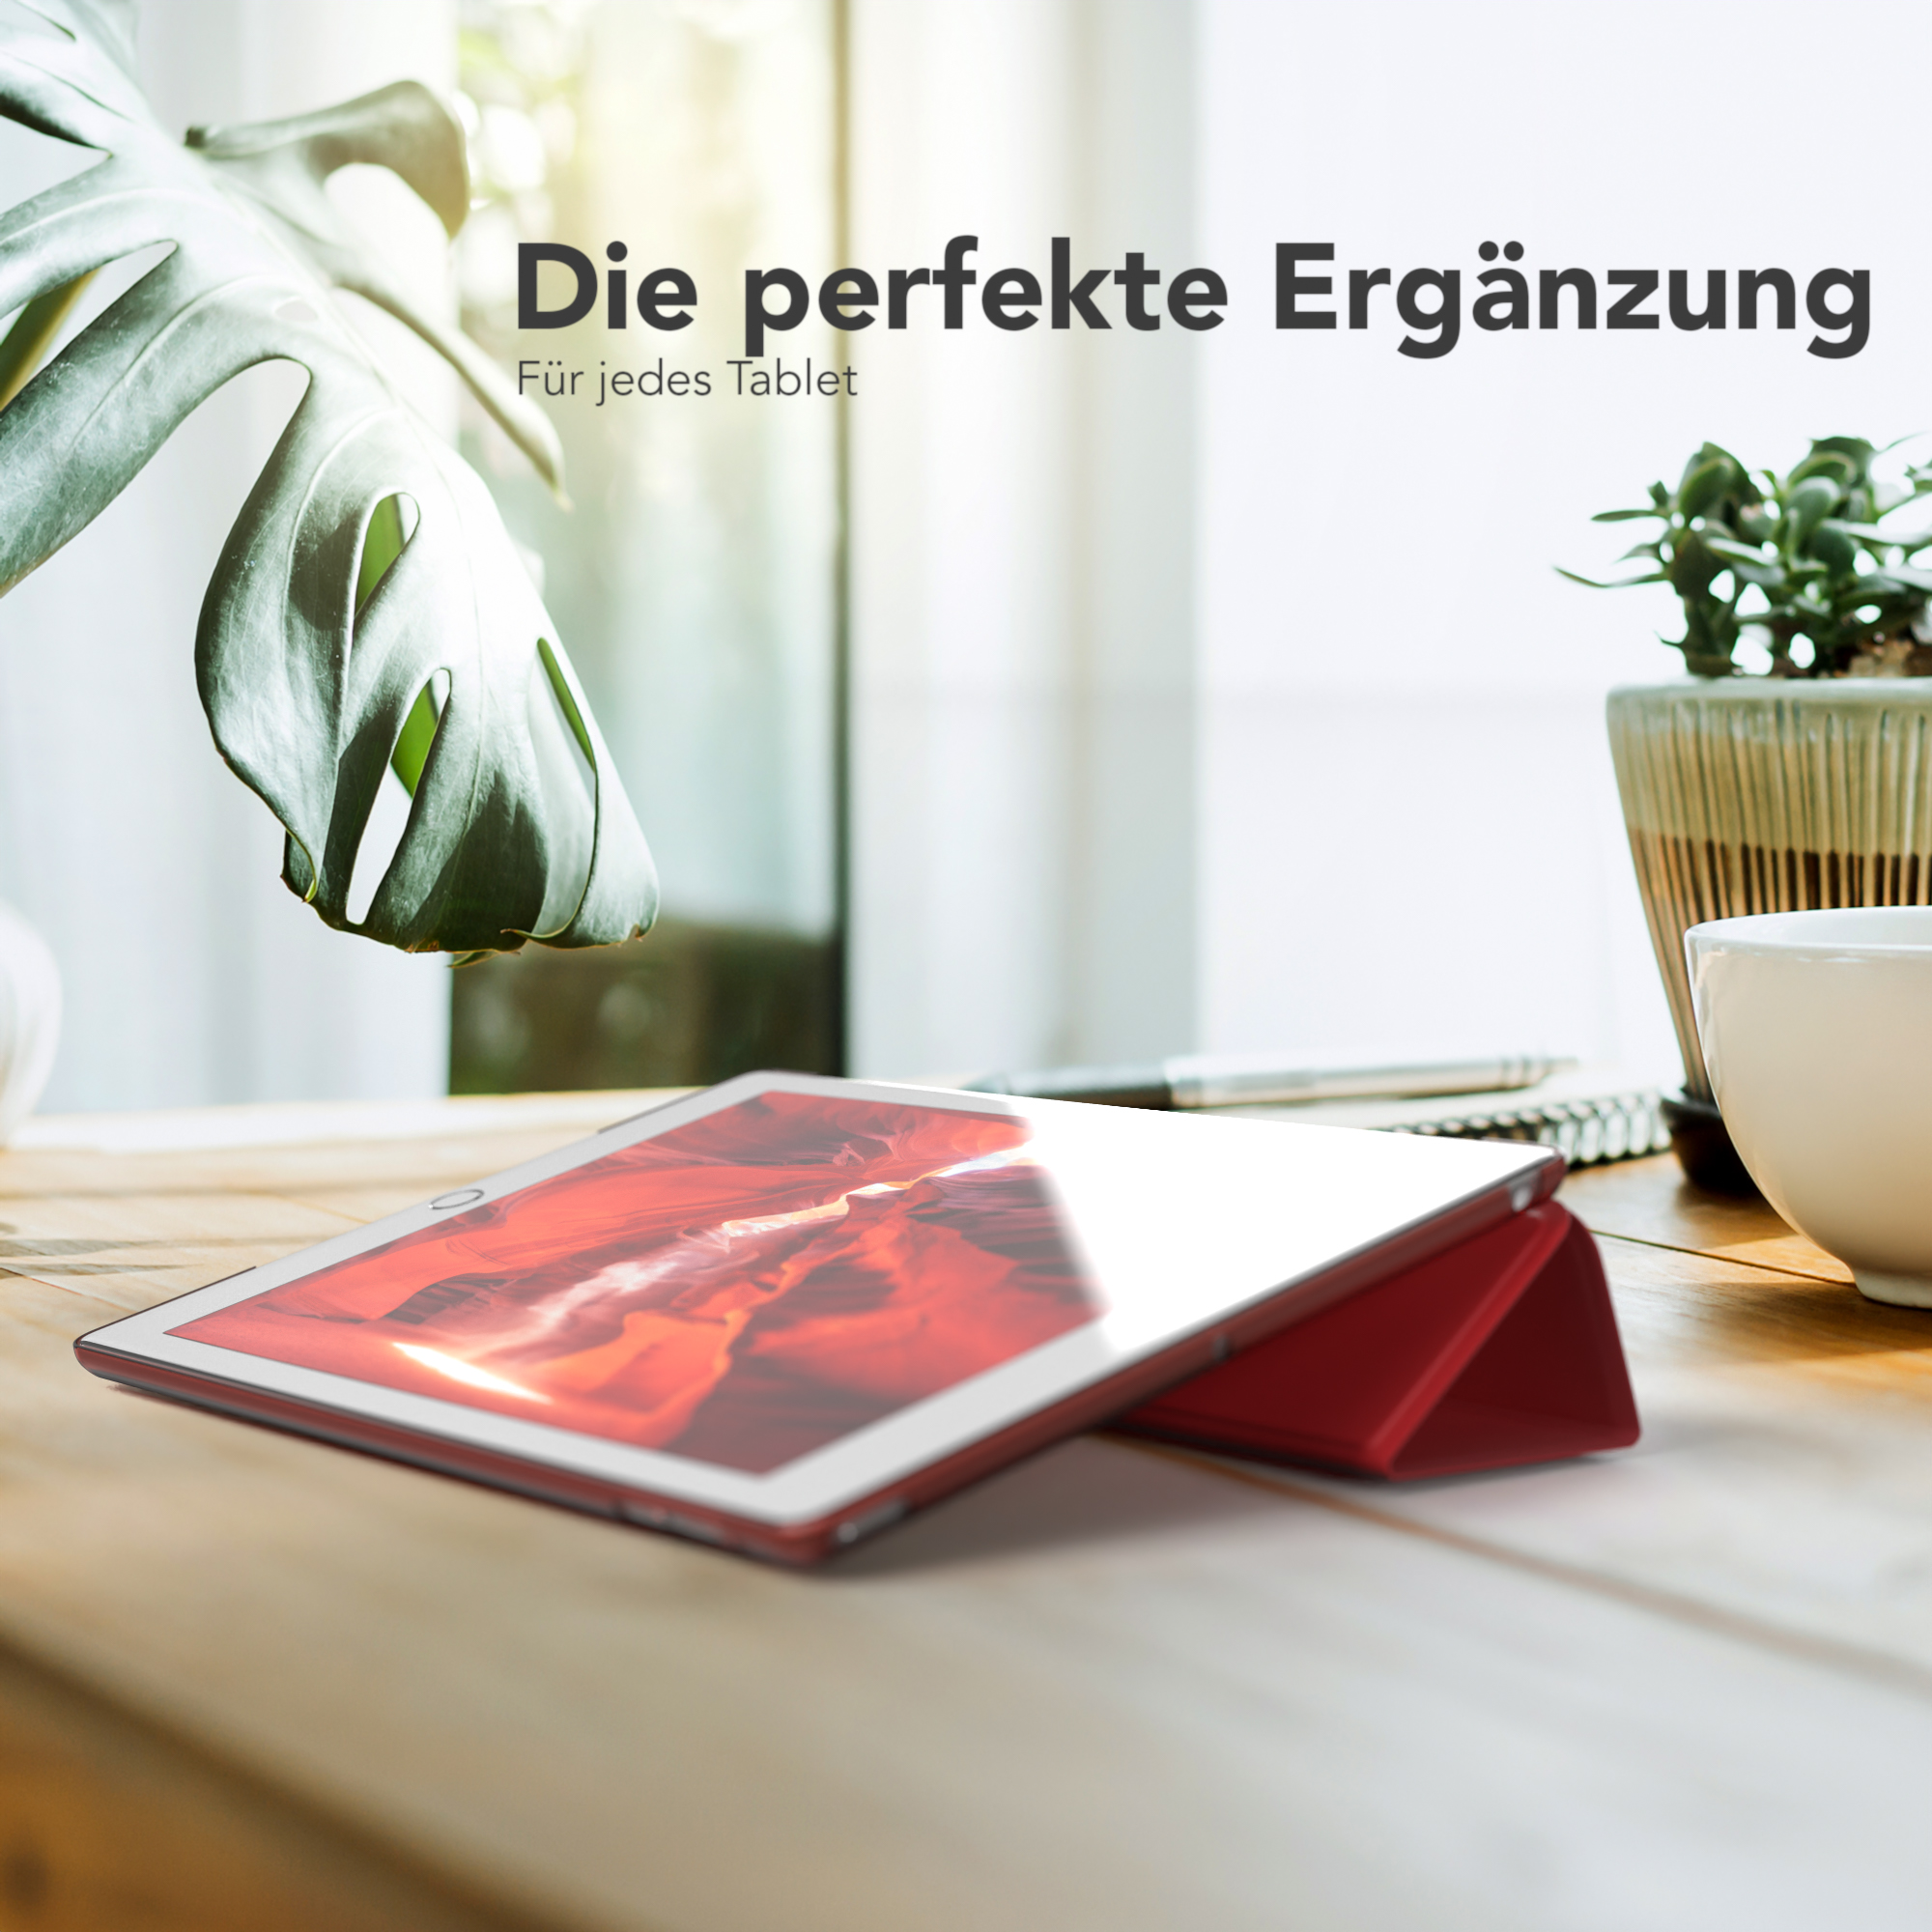 EAZY CASE Smart & Apple iPad Air Case Tablethülle 5./6. 1/Air für Kunstleder, für 2 Rot Bookcover Generation